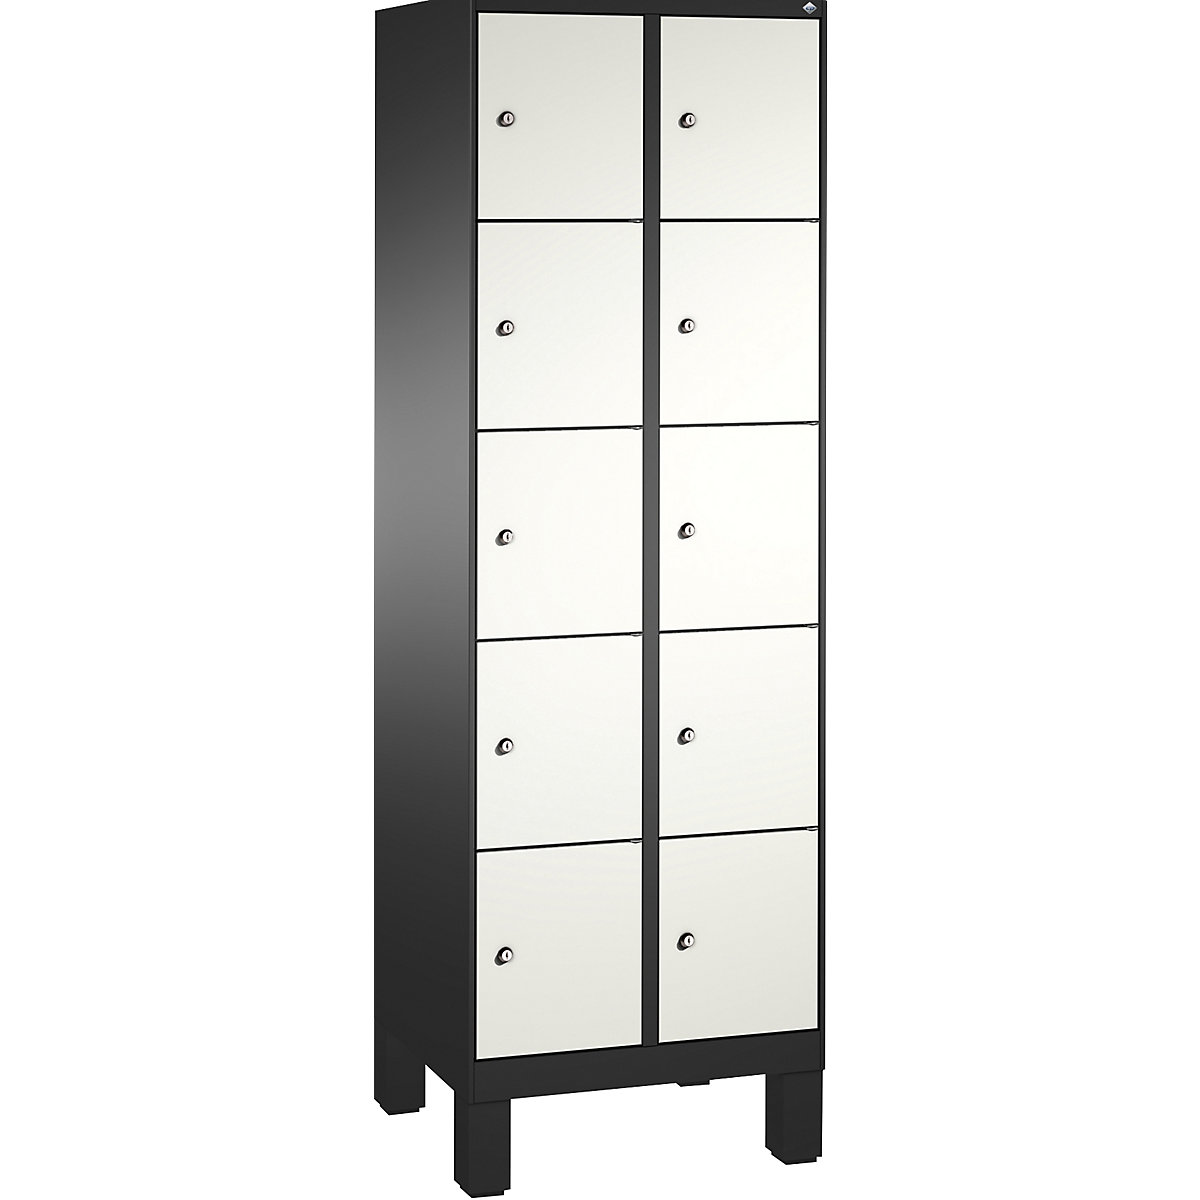 EVOLO locker unit, with feet – C+P, 2 compartments, 5 shelf compartments each, compartment width 300 mm, black grey / traffic white-3